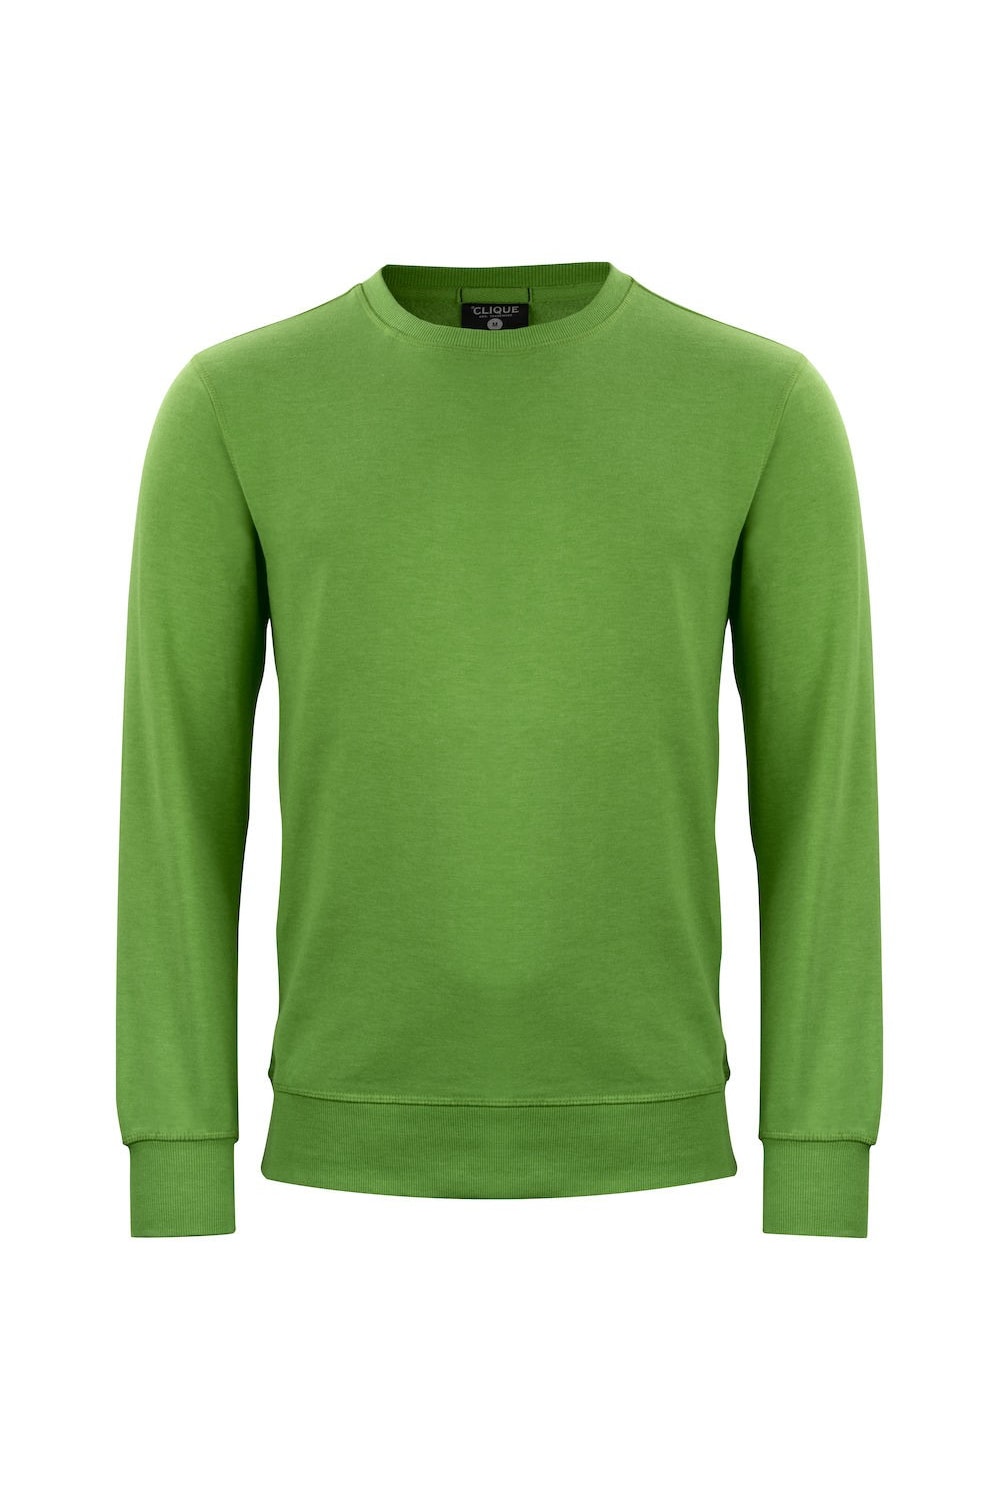 Unisex Adult Classic Melange Round Neck Sweatshirt - Green Melange